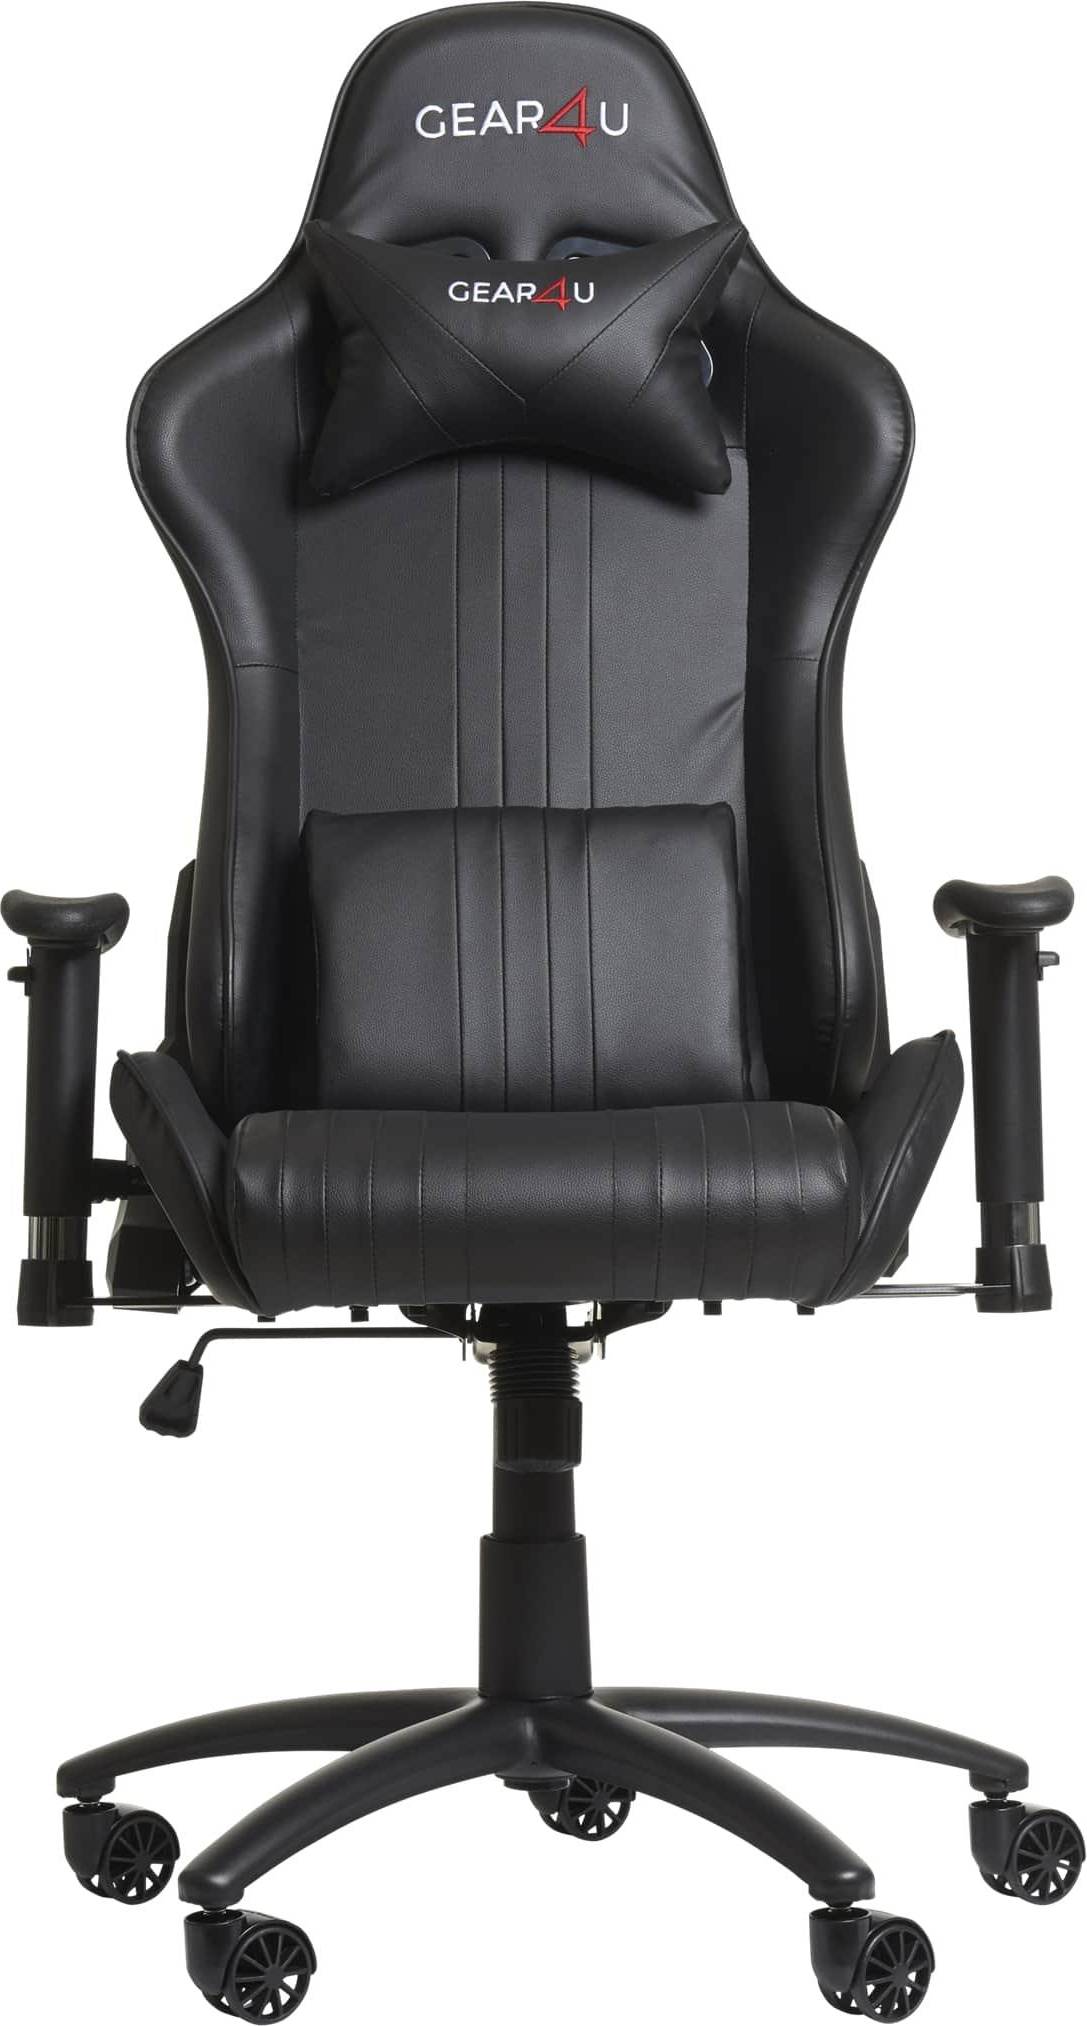  Bild på Gear4U Elite Gaming Chair - Black gamingstol